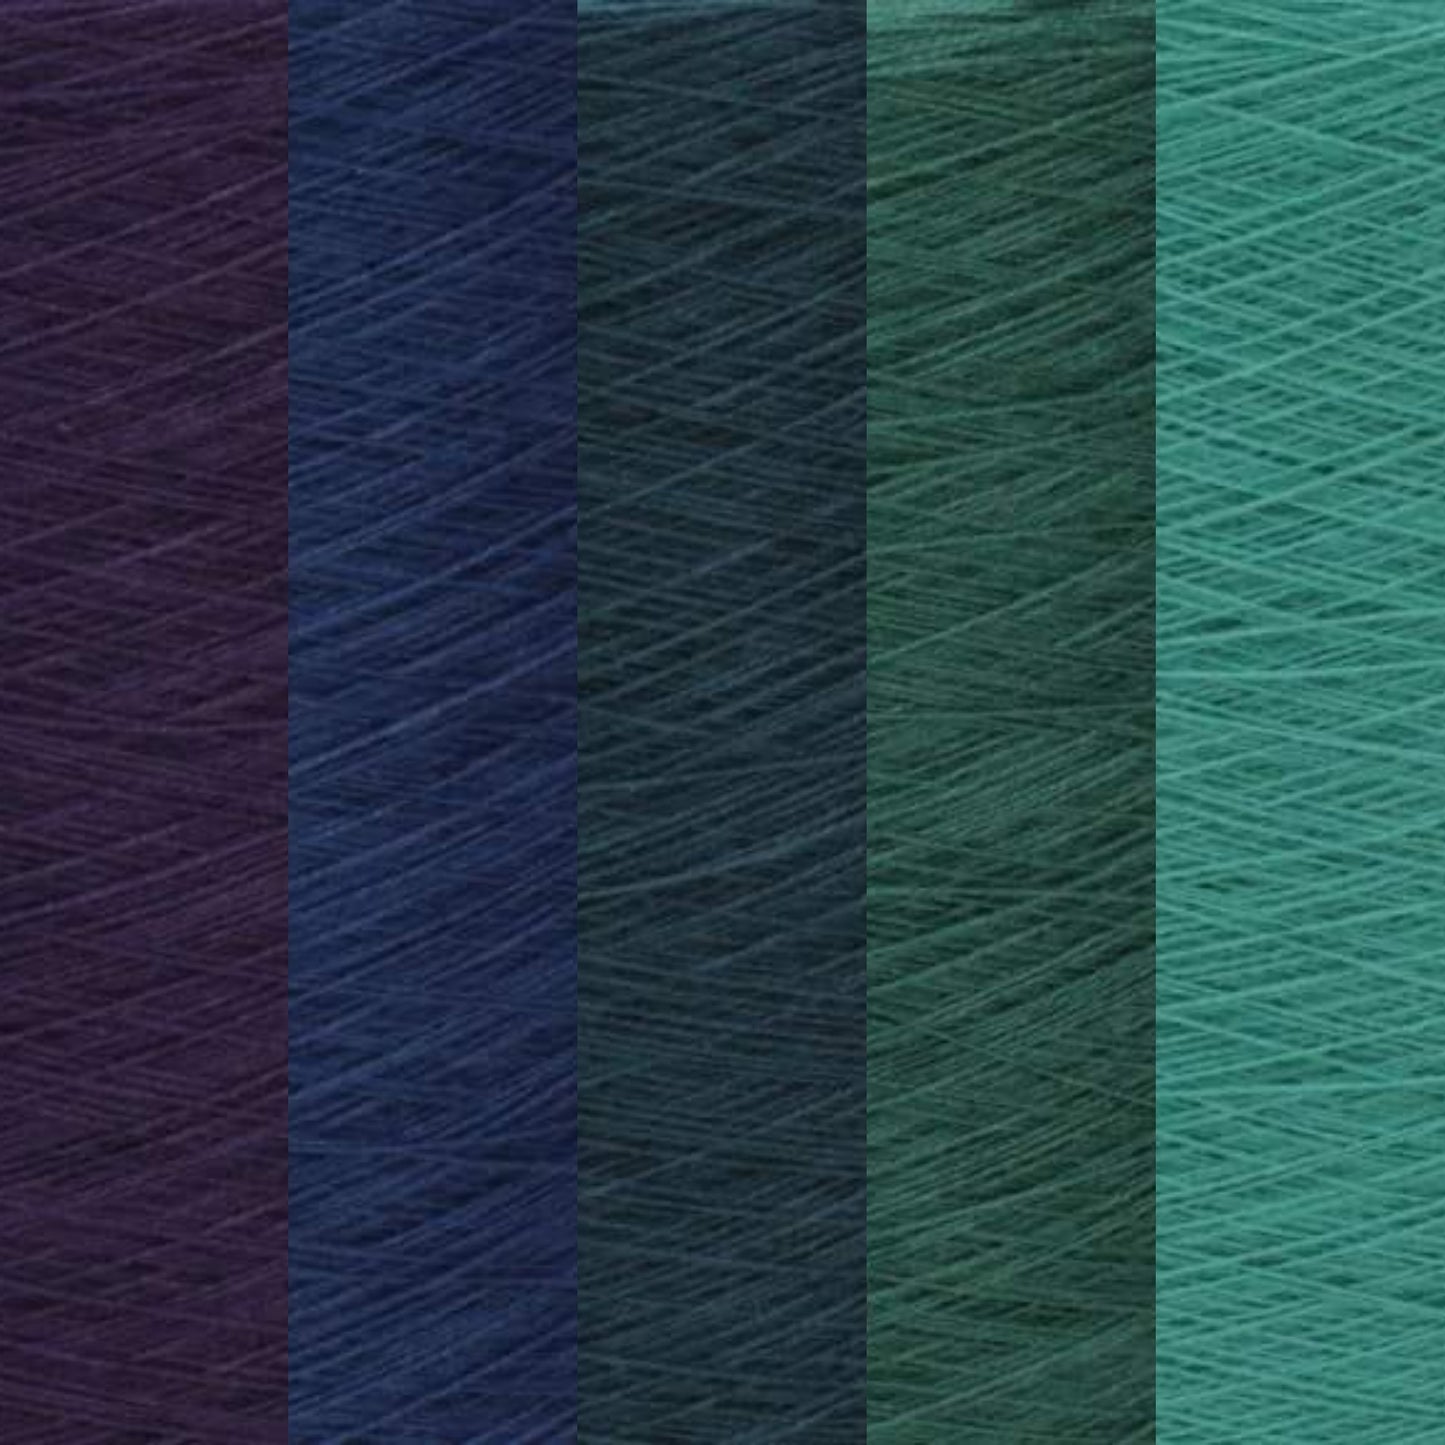 Gradient ombre yarn cake, colour combination C167'